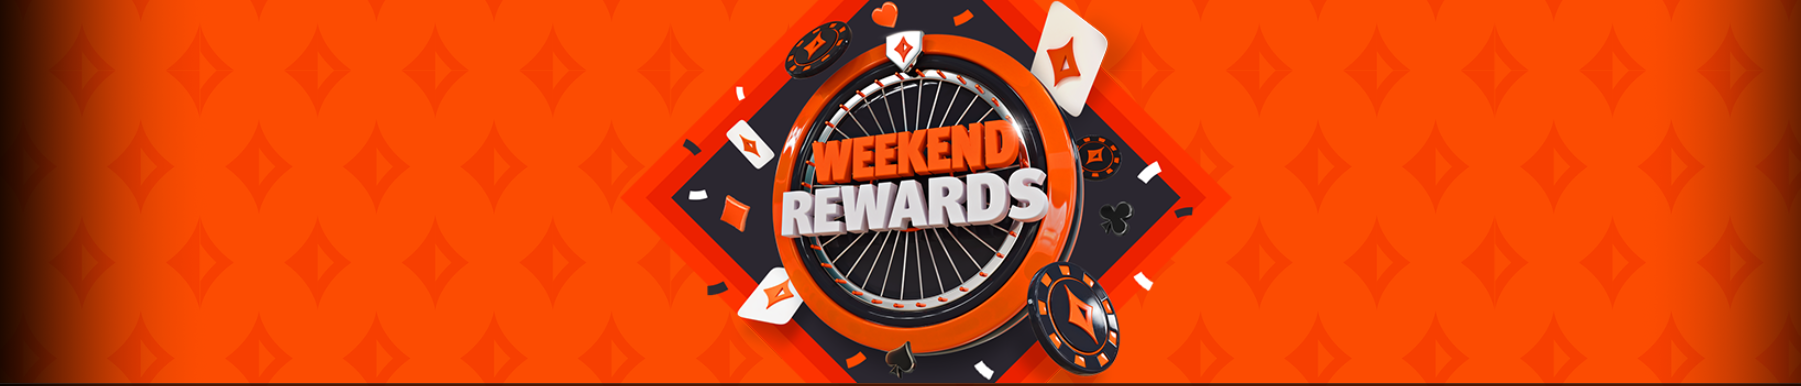 Weekend Rewards Poker Promotion